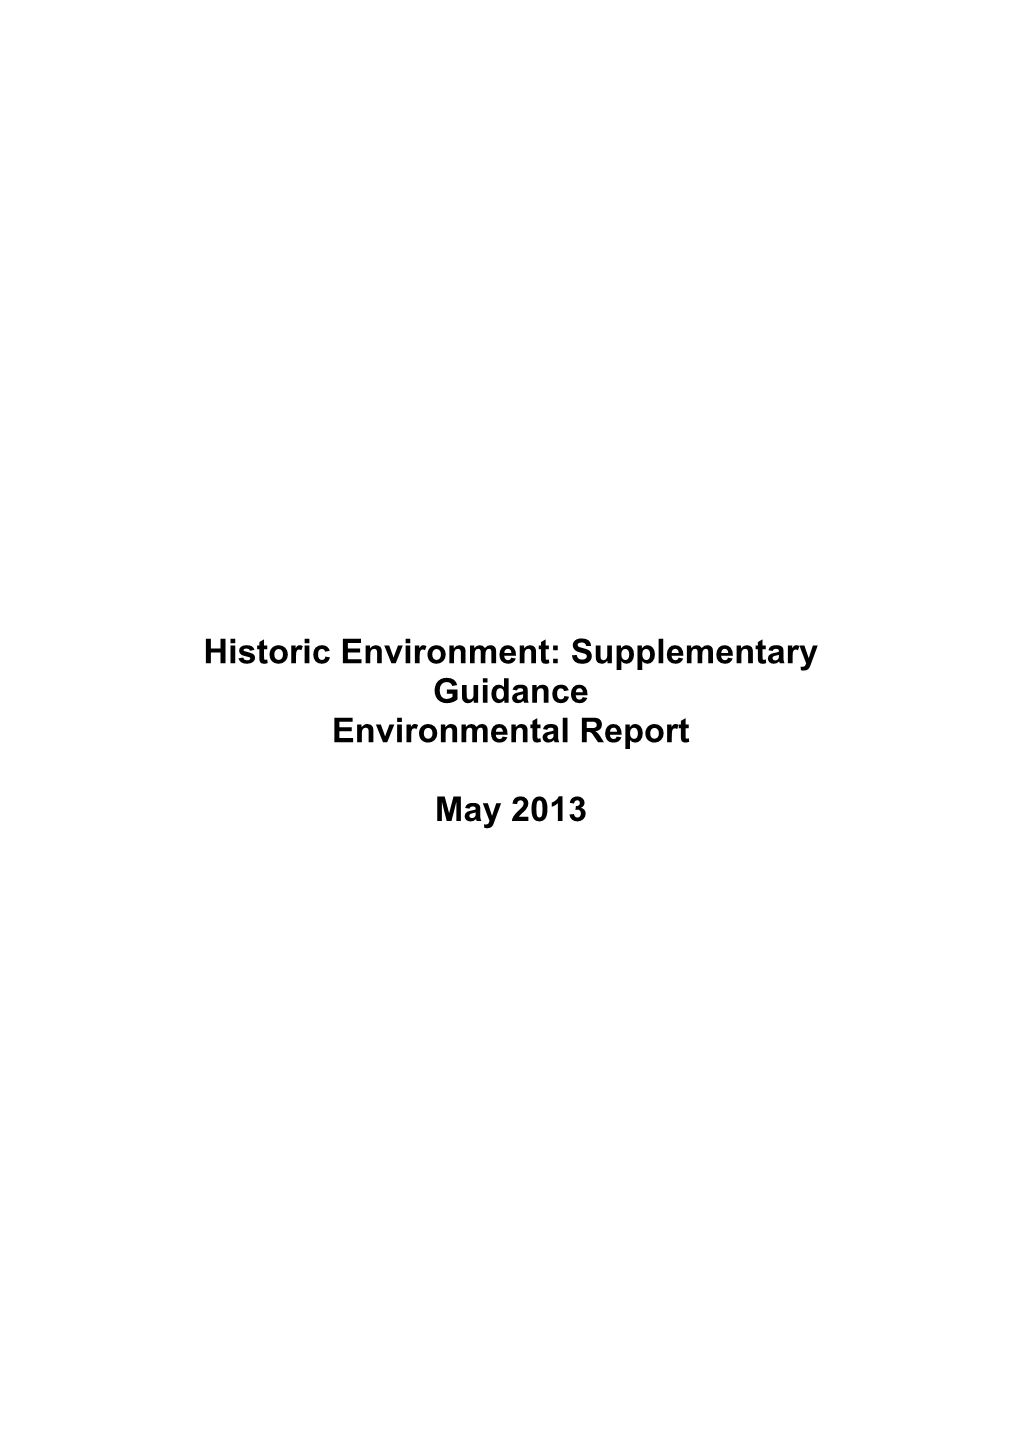 Historic Environment: Supplementary Guidance